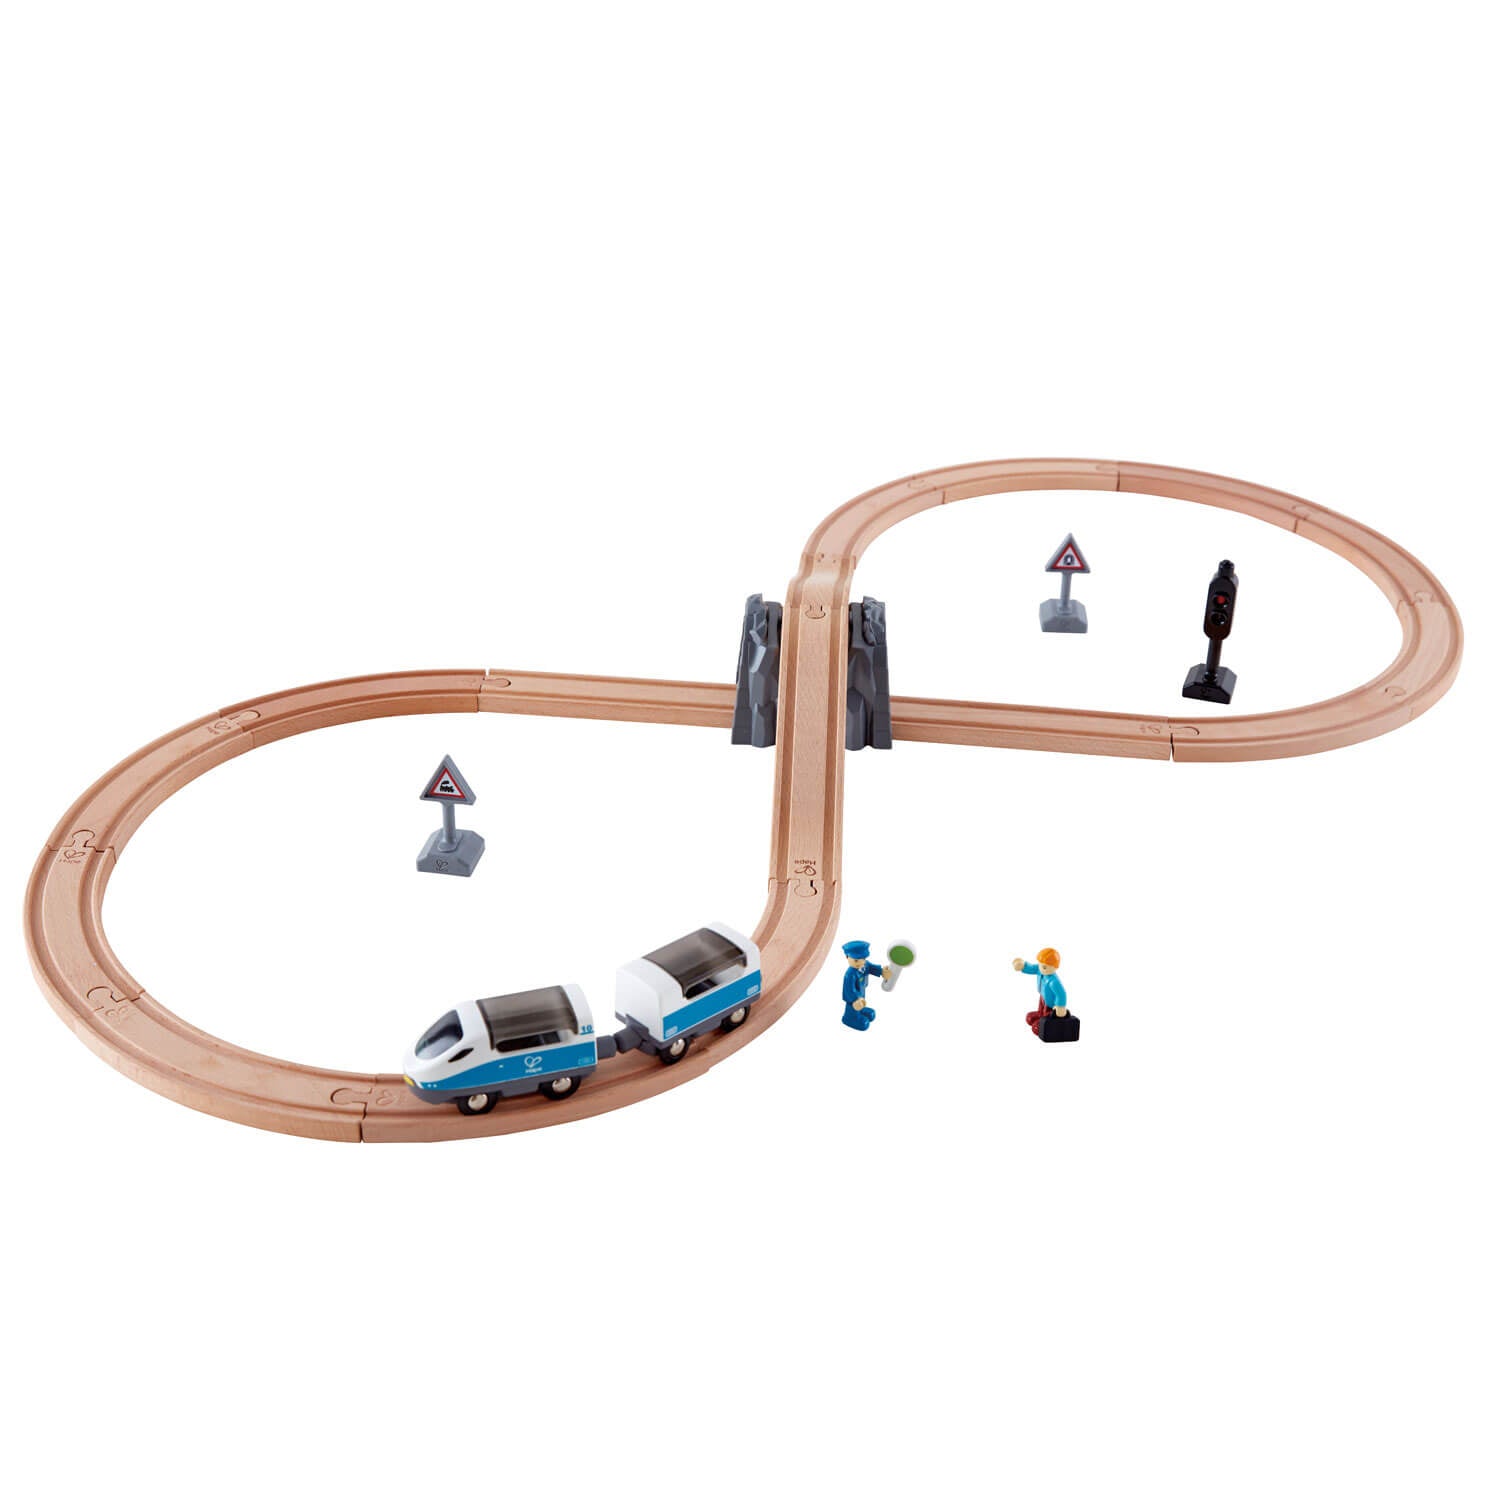 Hape Figure 8 Train Set: Safety Wooden Railway